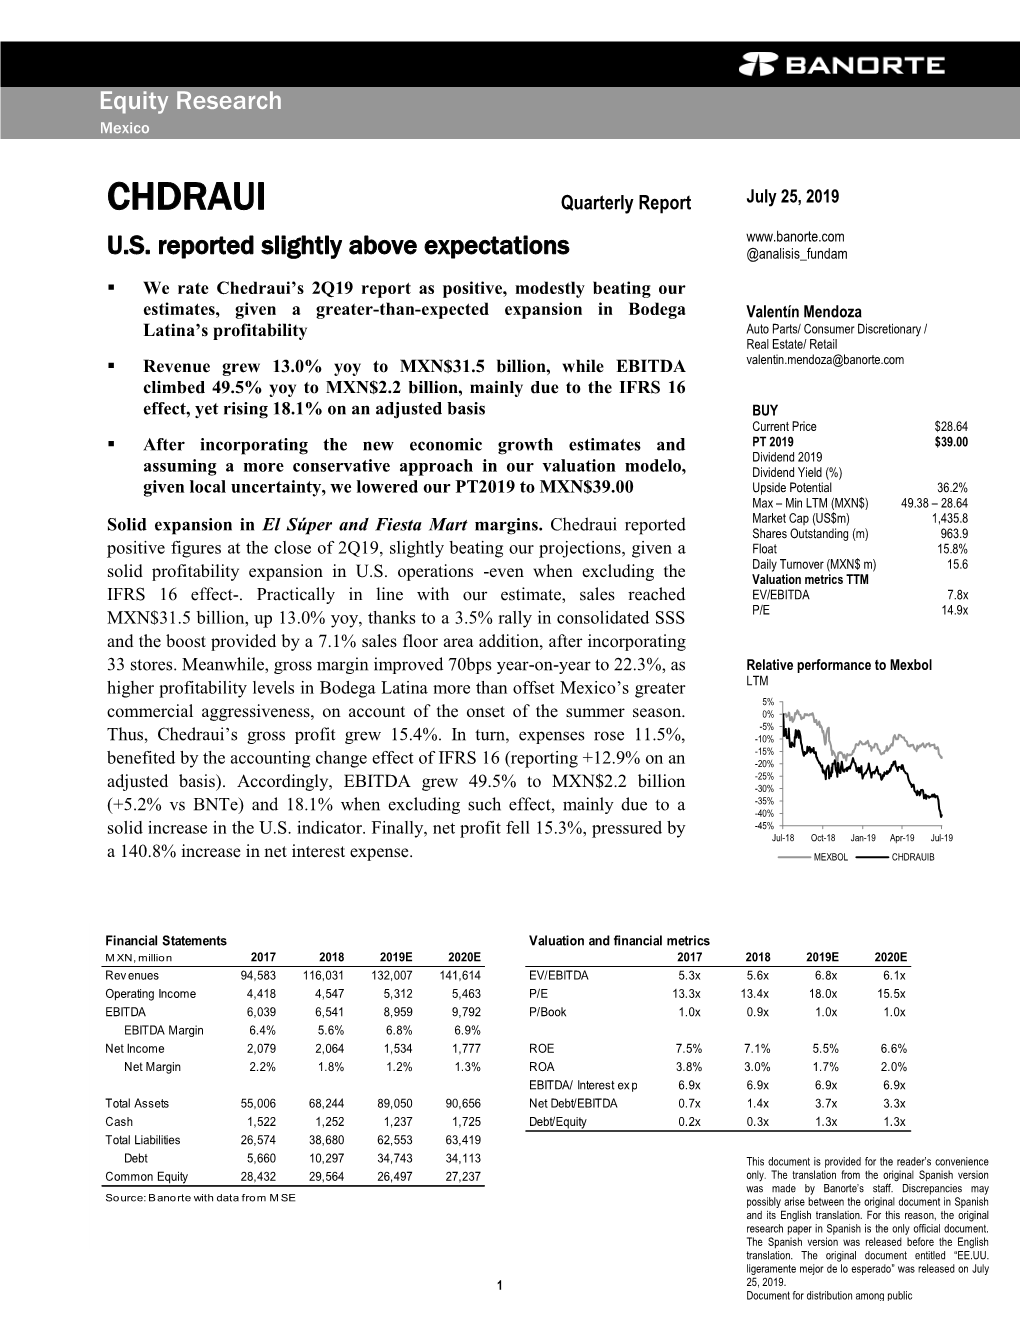 CHDRAUI Quarterly Report July 25, 2019